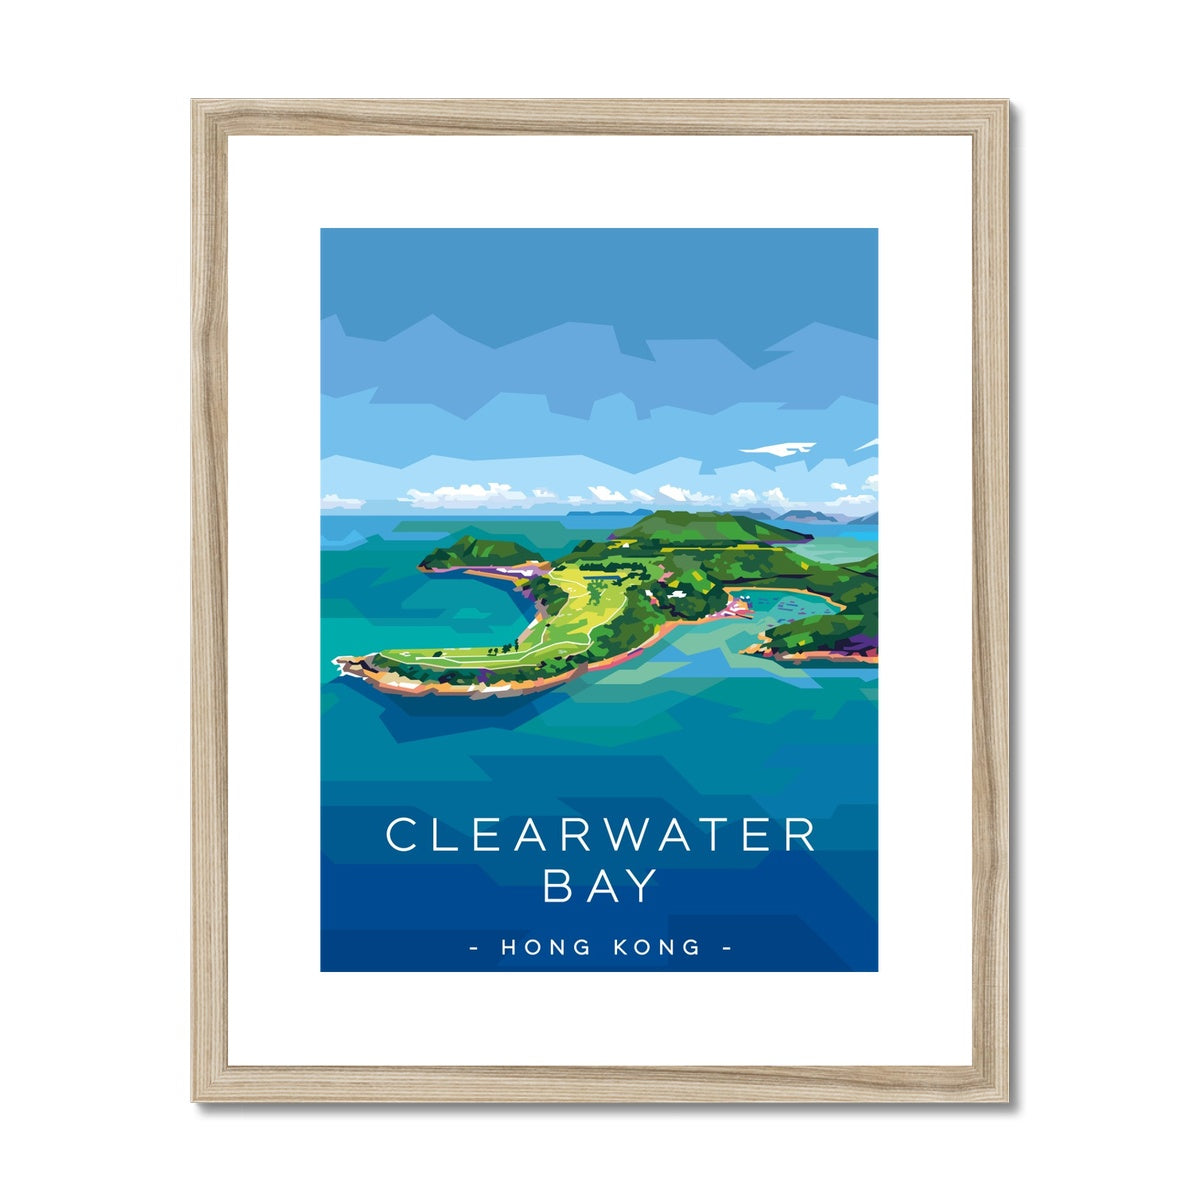 Hong Kong Travel - Clearwater Bay Framed & Mounted Print